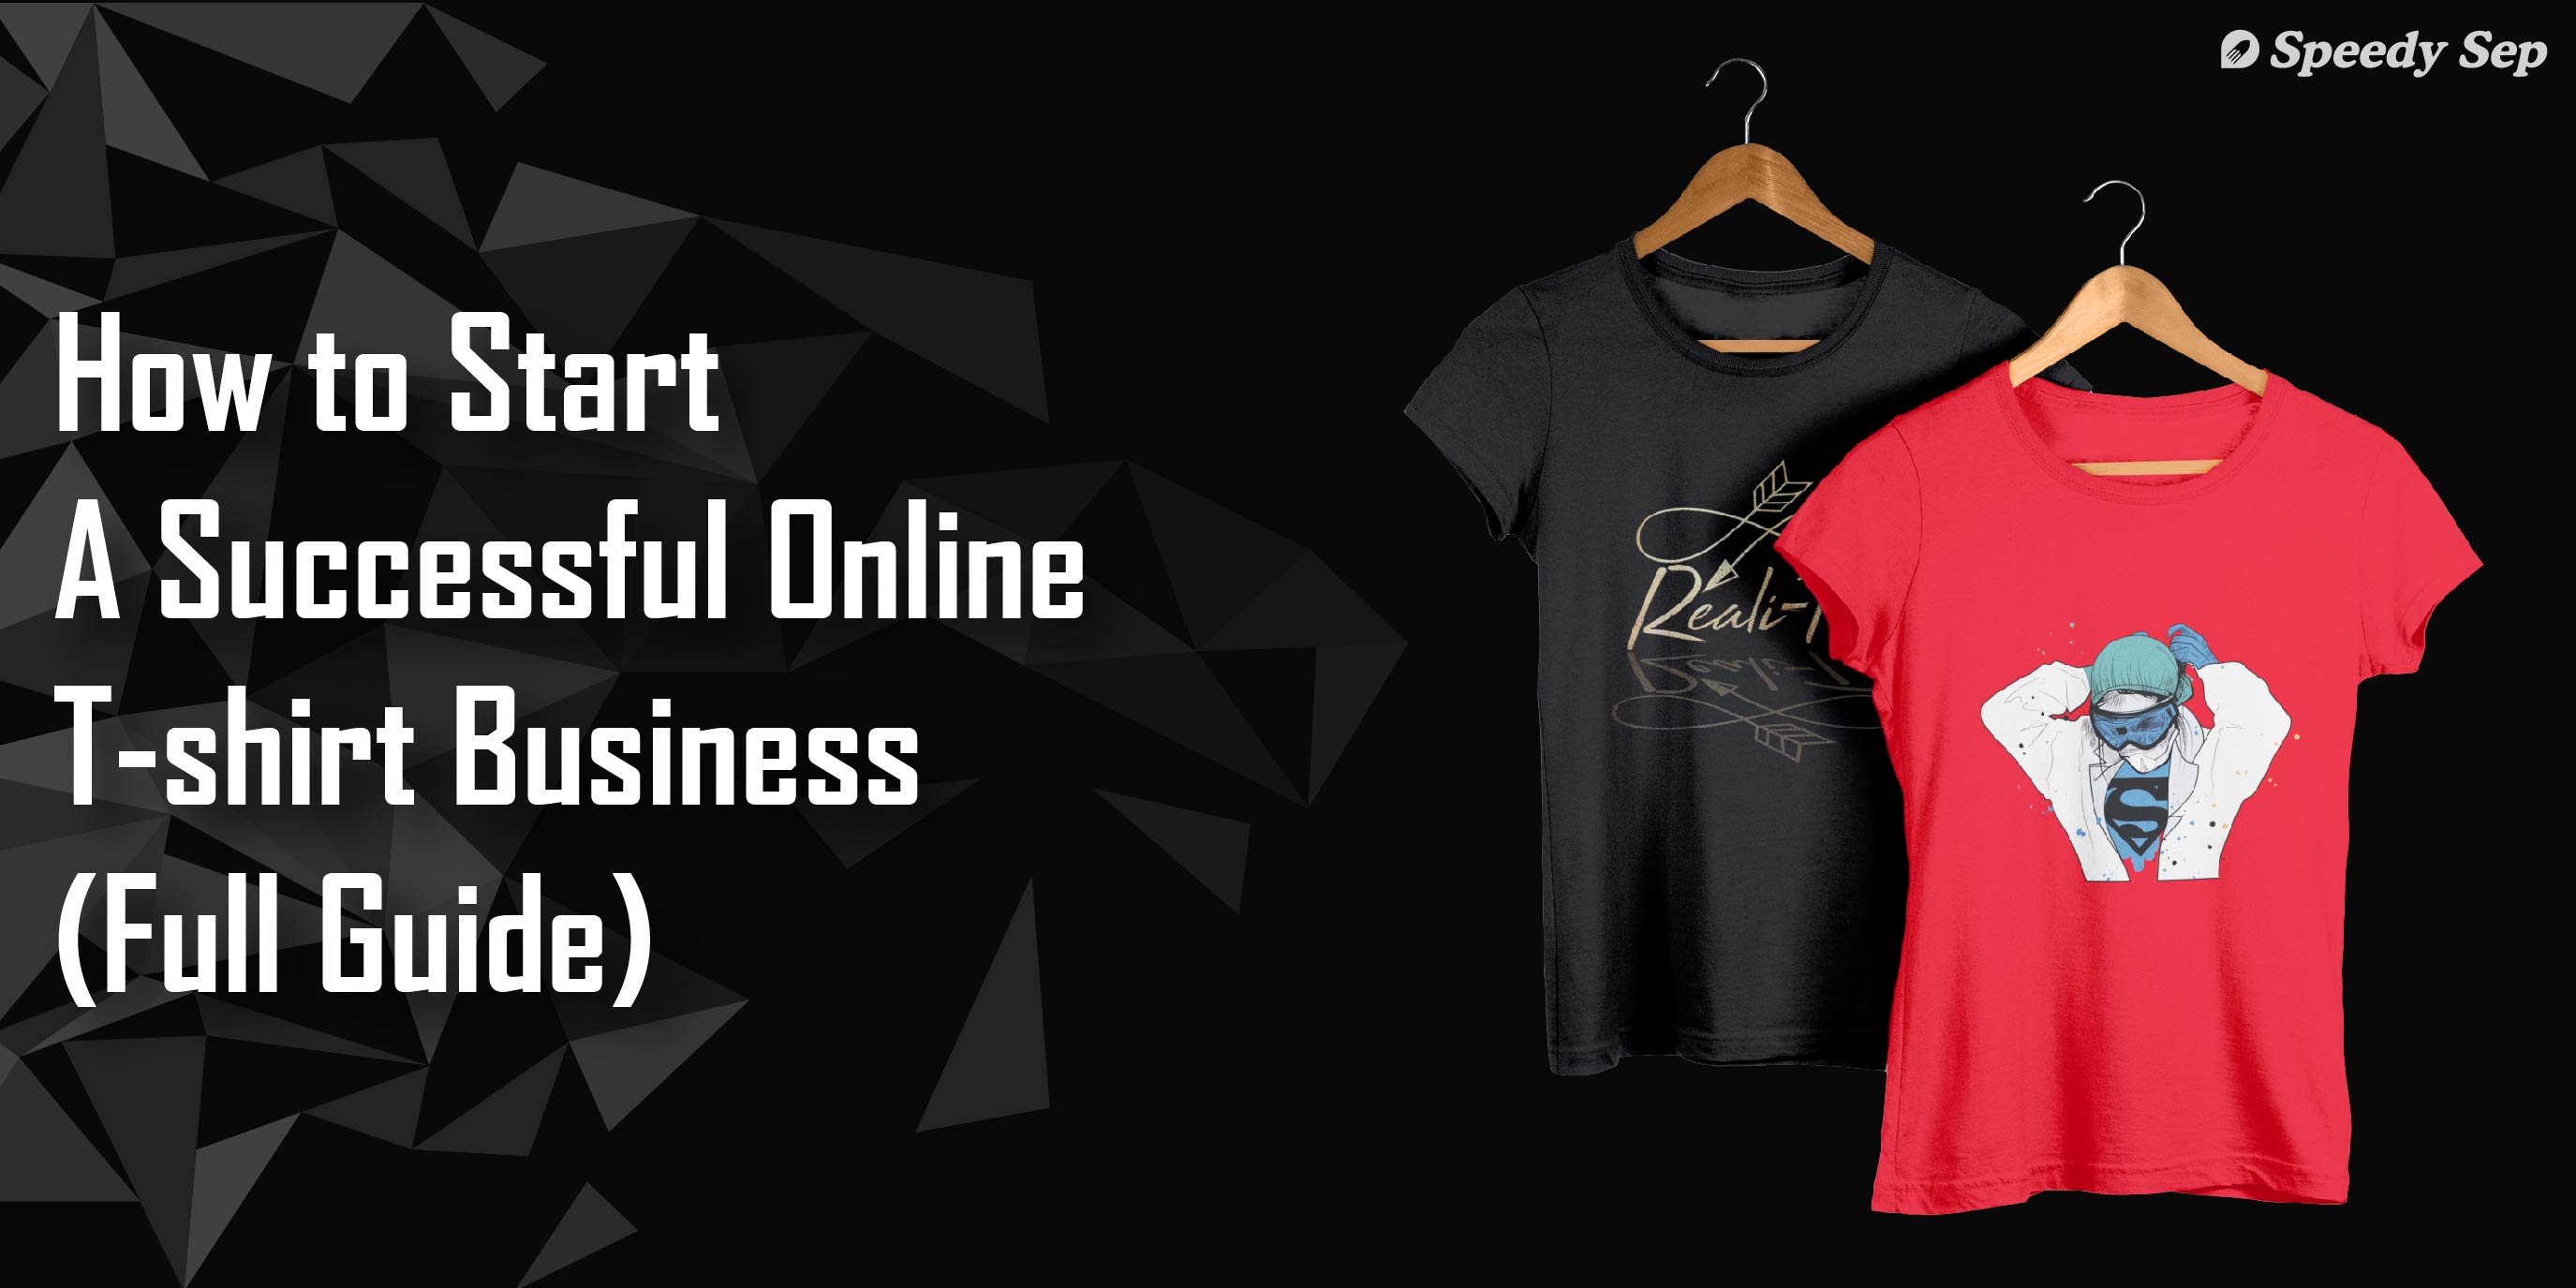 Alvorlig emulering browser T-shirt Business, Successful Online T-shirt Business